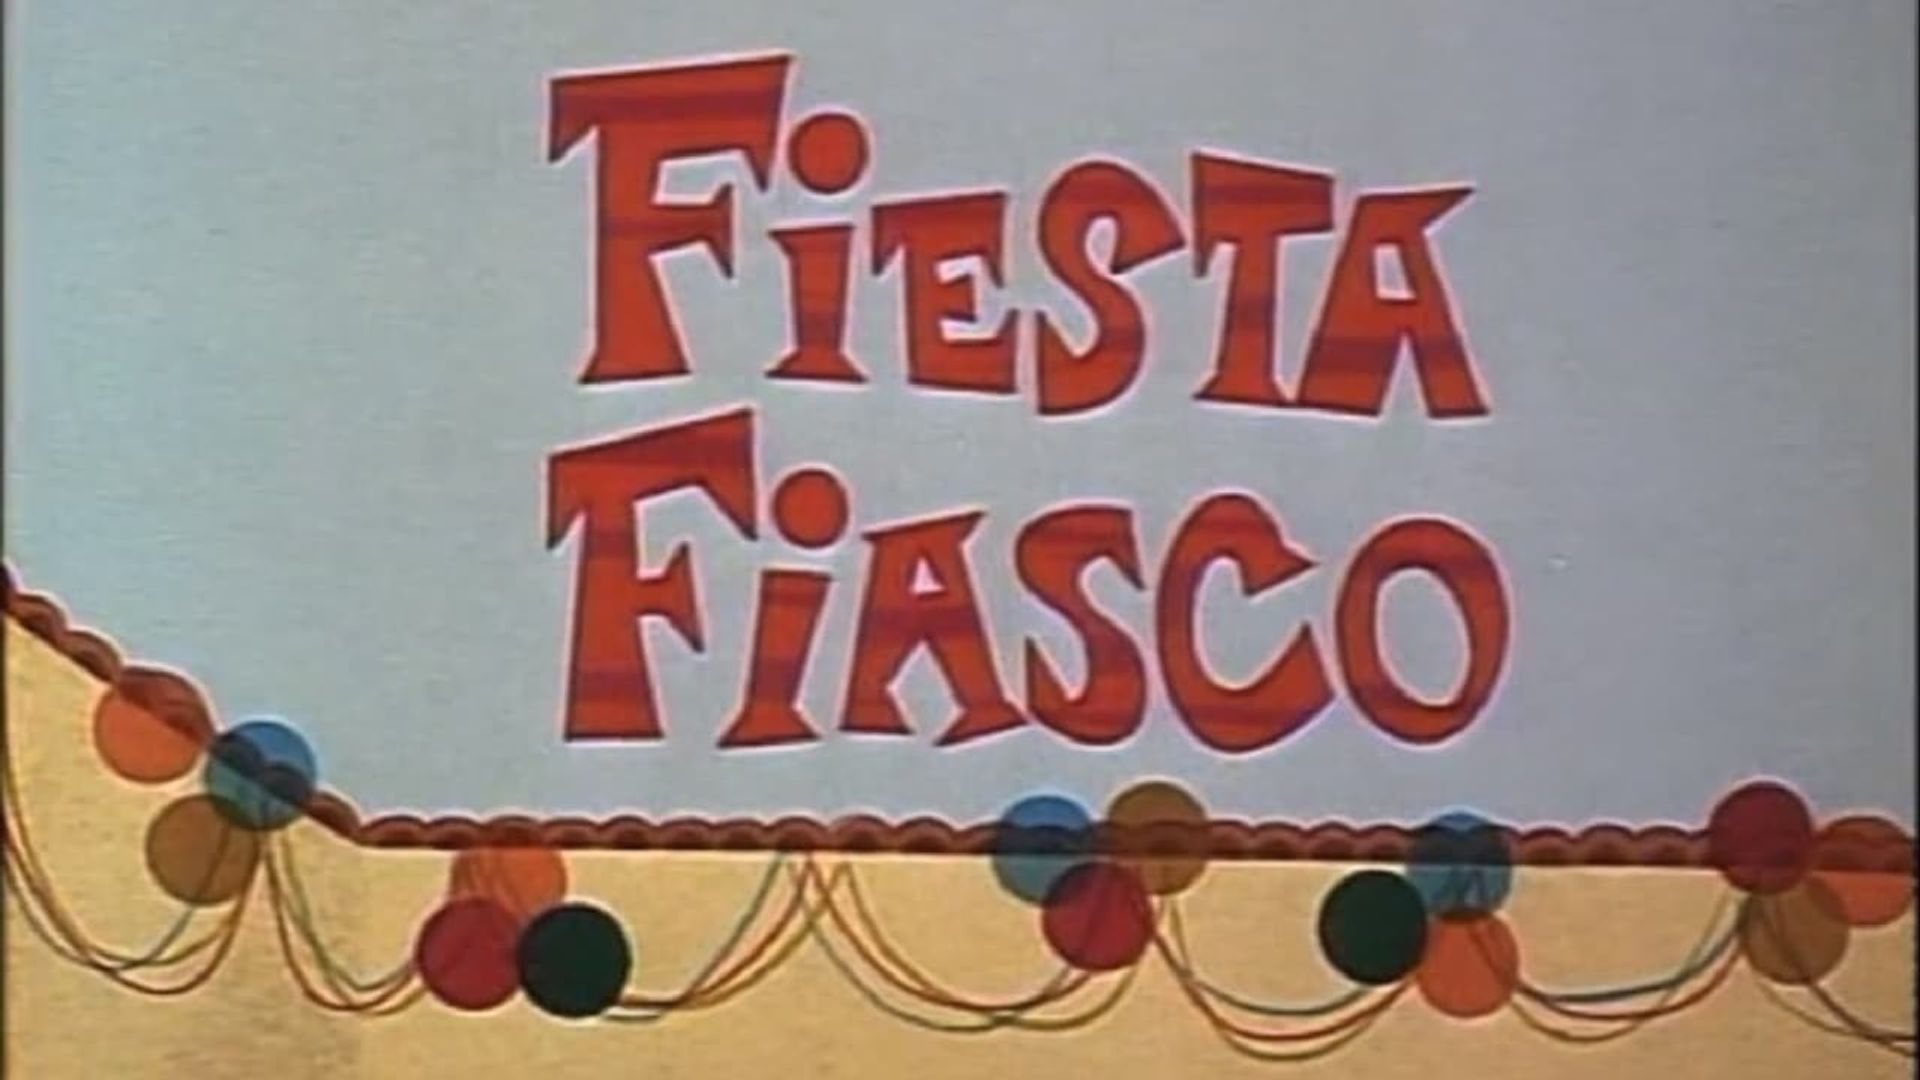 Fiesta Fiasco background